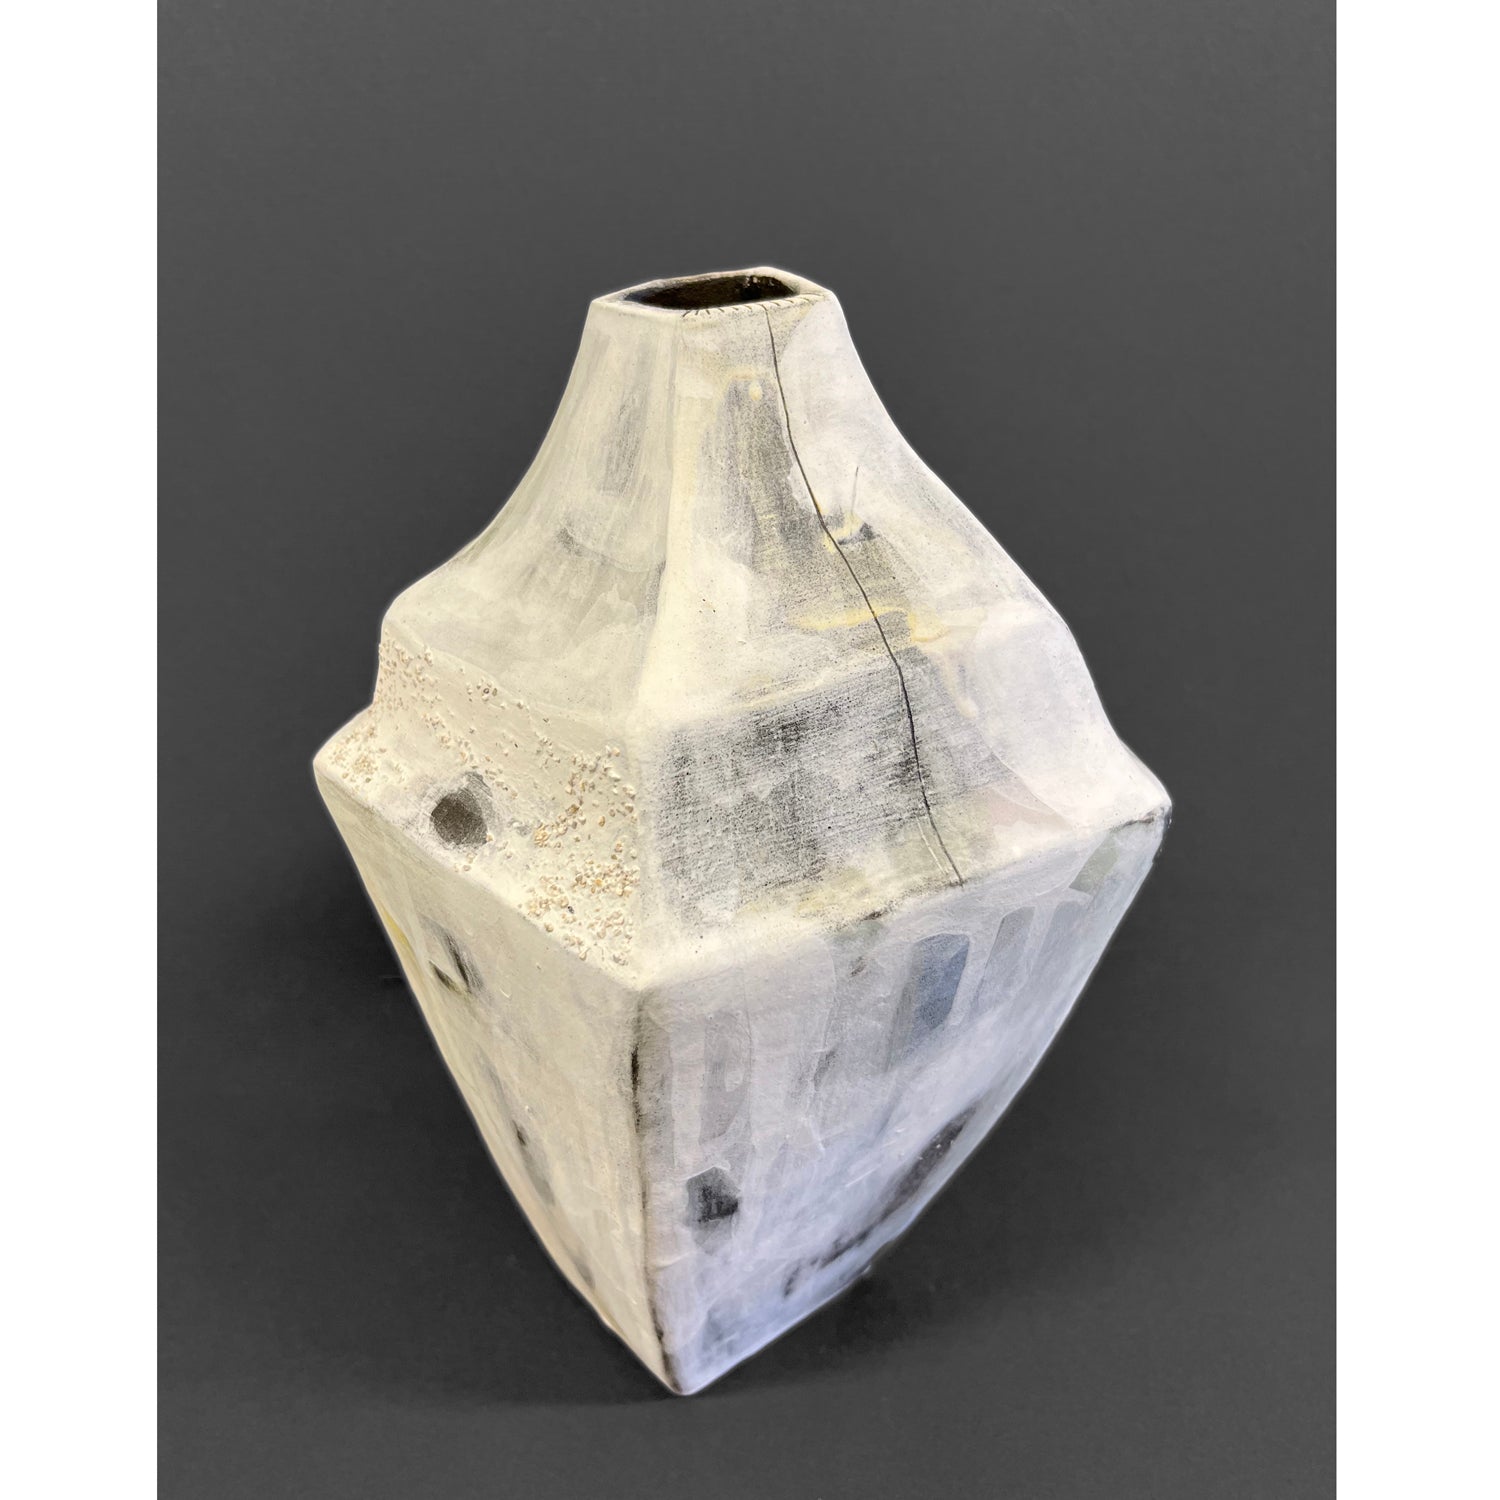 Mariana Bolanos Inclan - Small White Vase